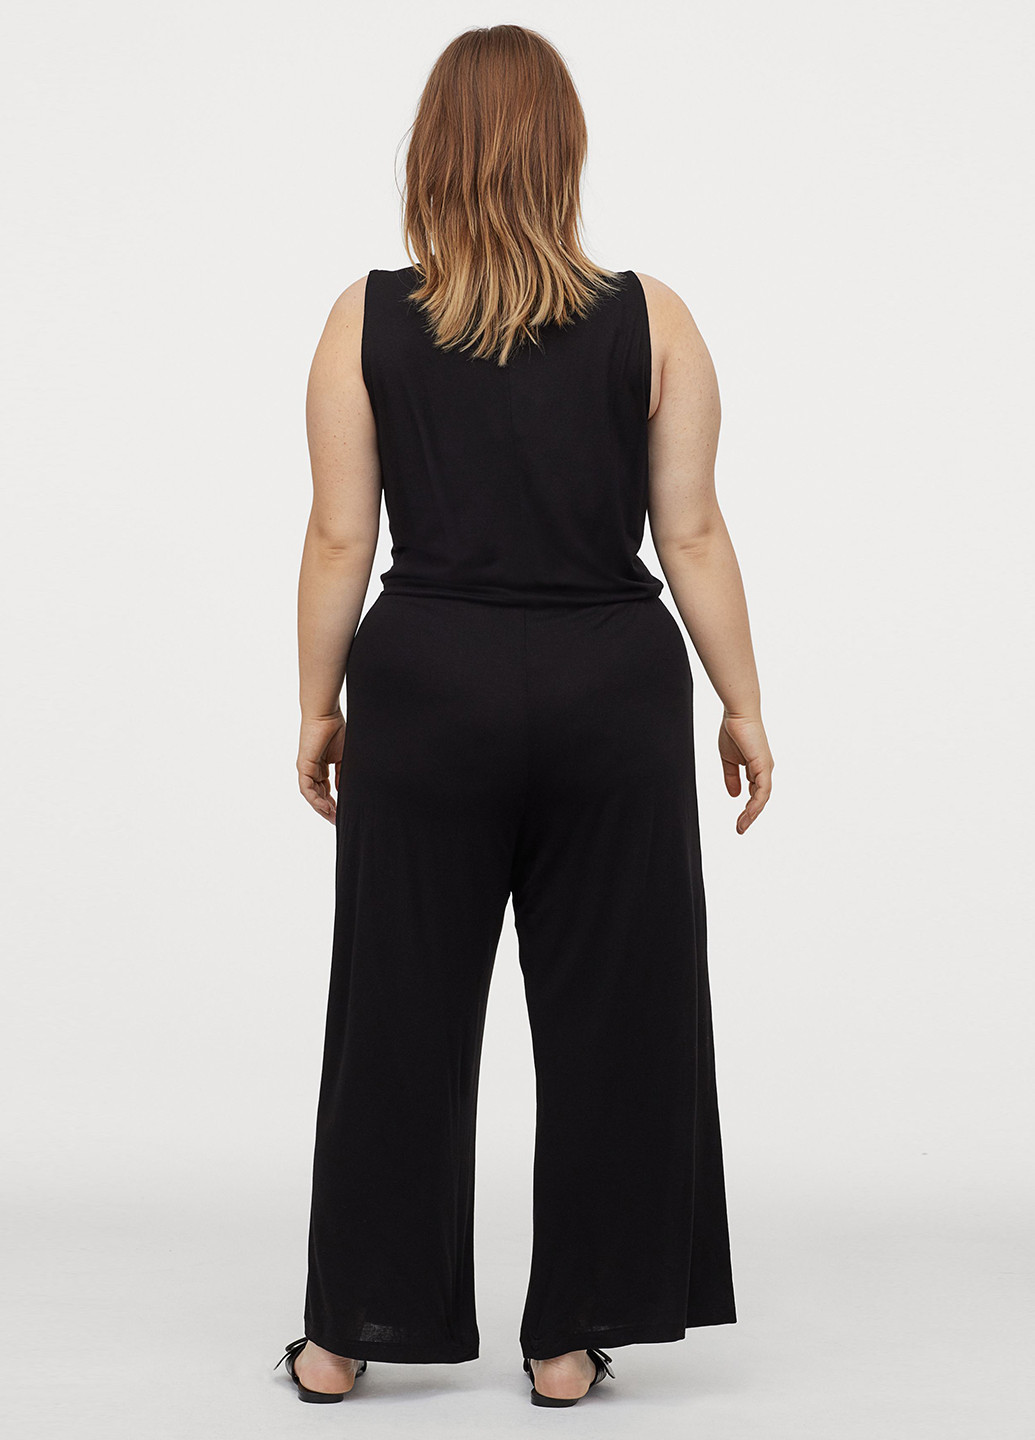 Комбинезон H&M комбинезон-брюки однотонный чёрный кэжуал трикотаж, вискоза